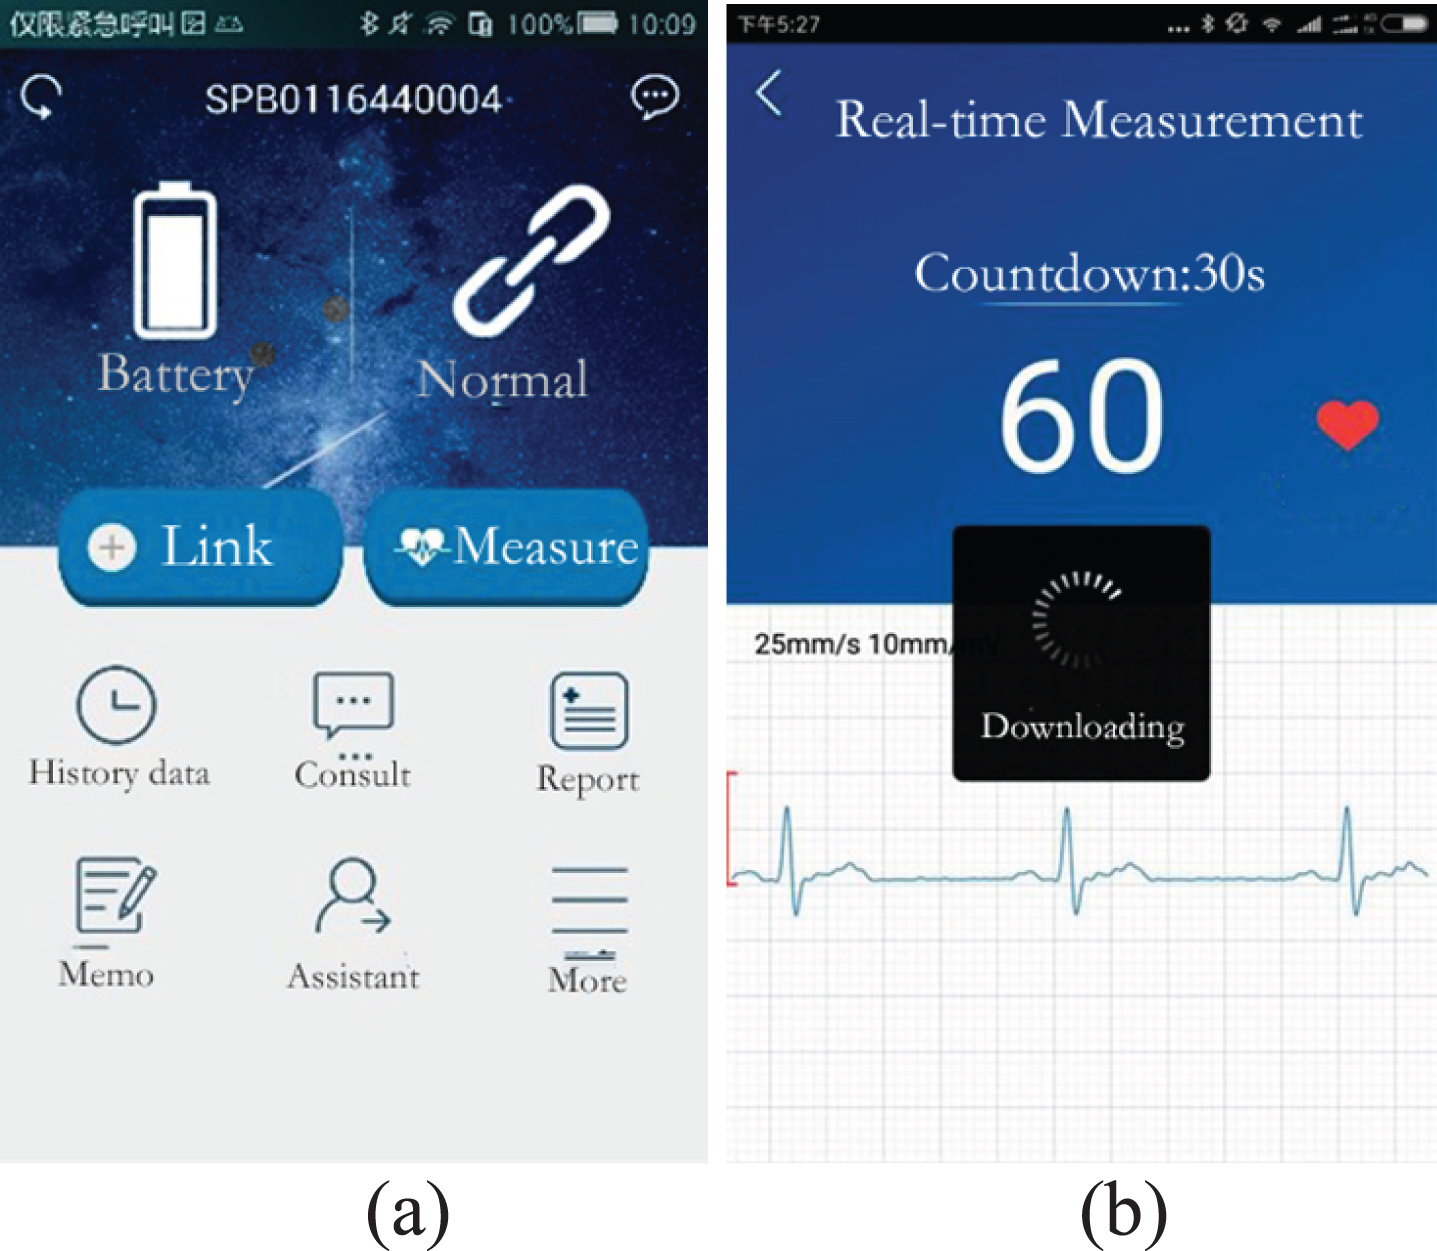 Smartphone Heart Monitor Beats Doctors at Diagnosing Atrial Fibrillation -  IEEE Spectrum